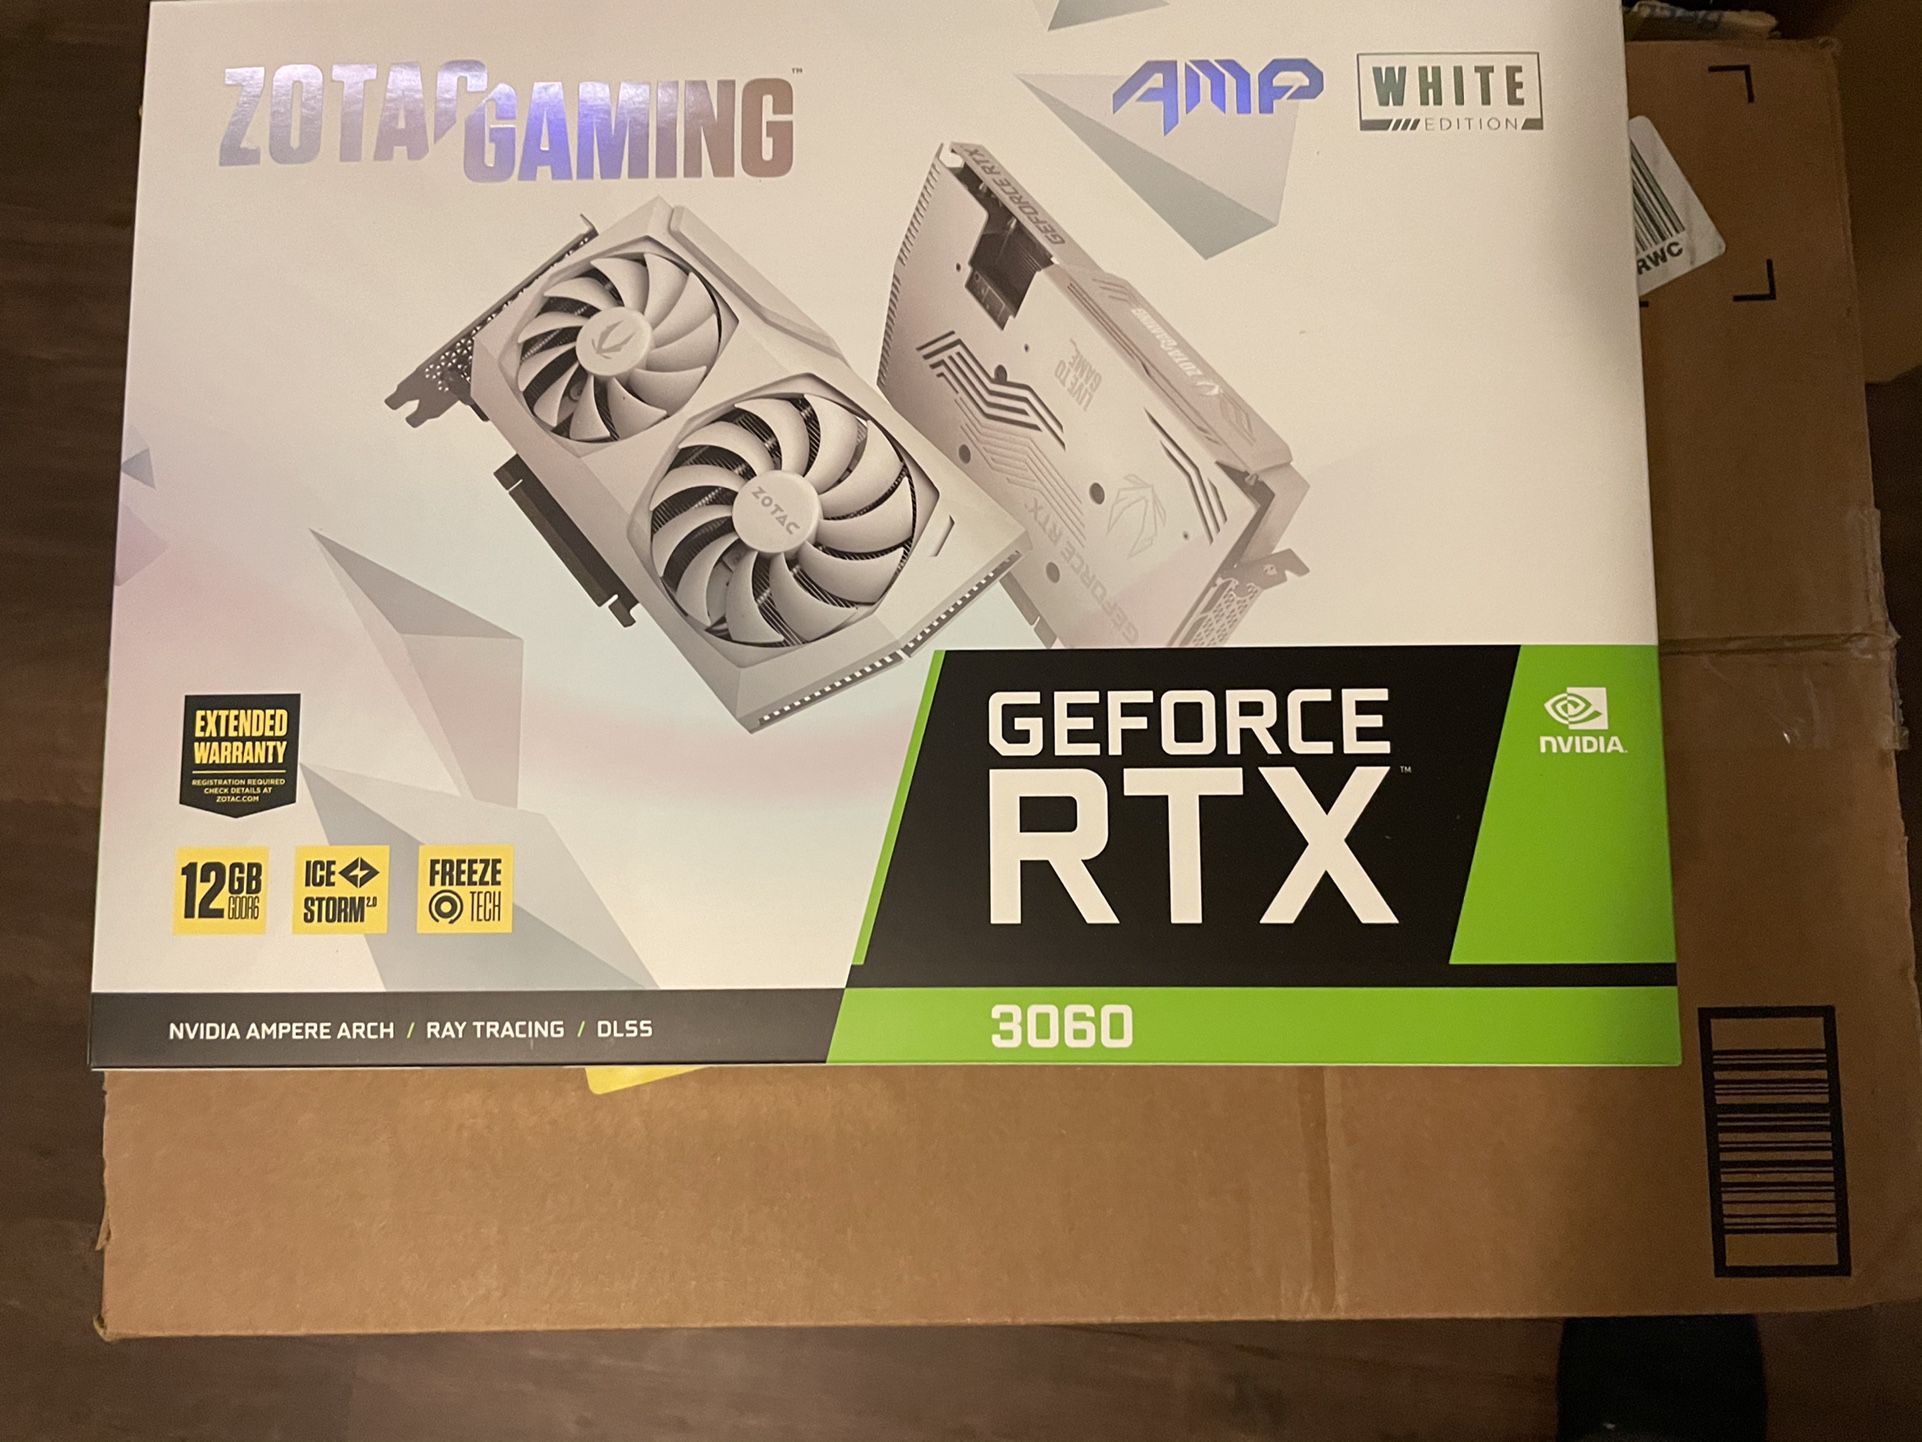 New ZOTAC GAMING GeForce RTX 3060 AMP White Edition GPU Graphics card